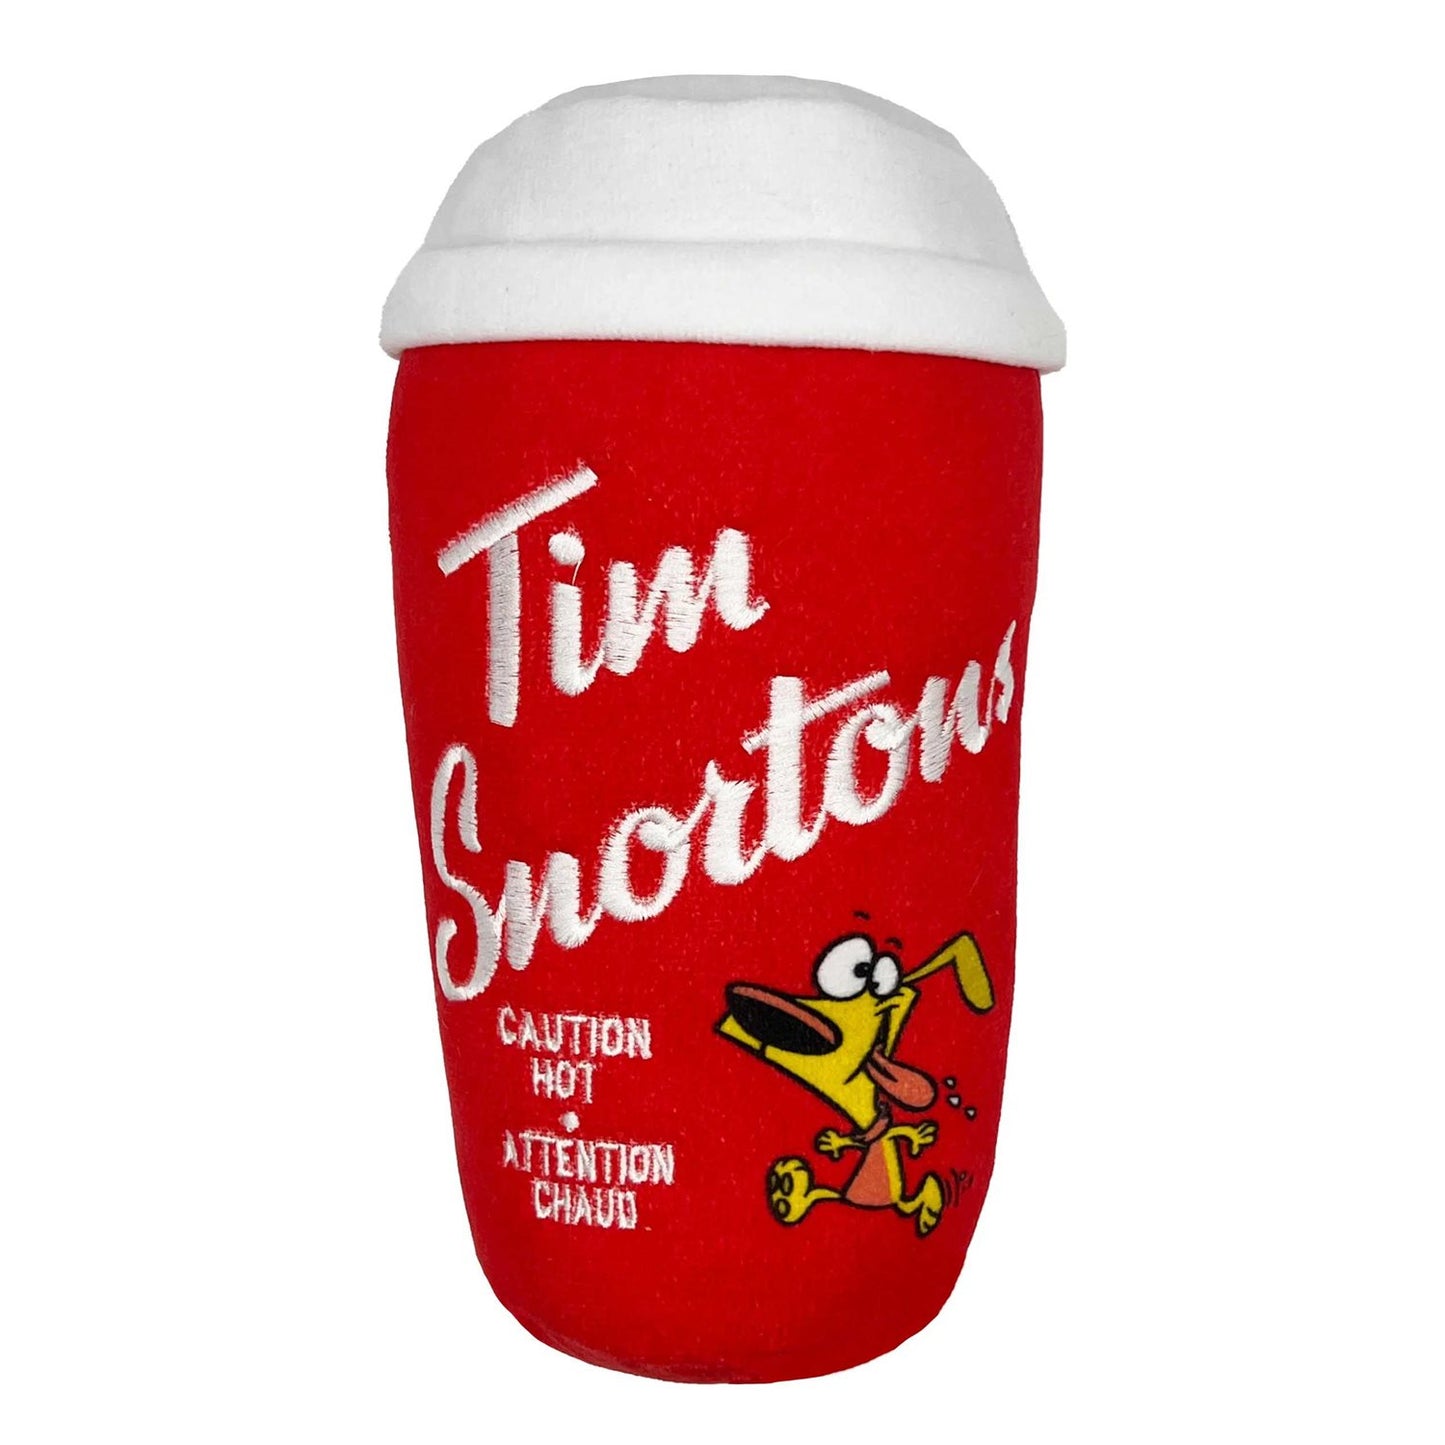 Tim Snortons Coffee - Small